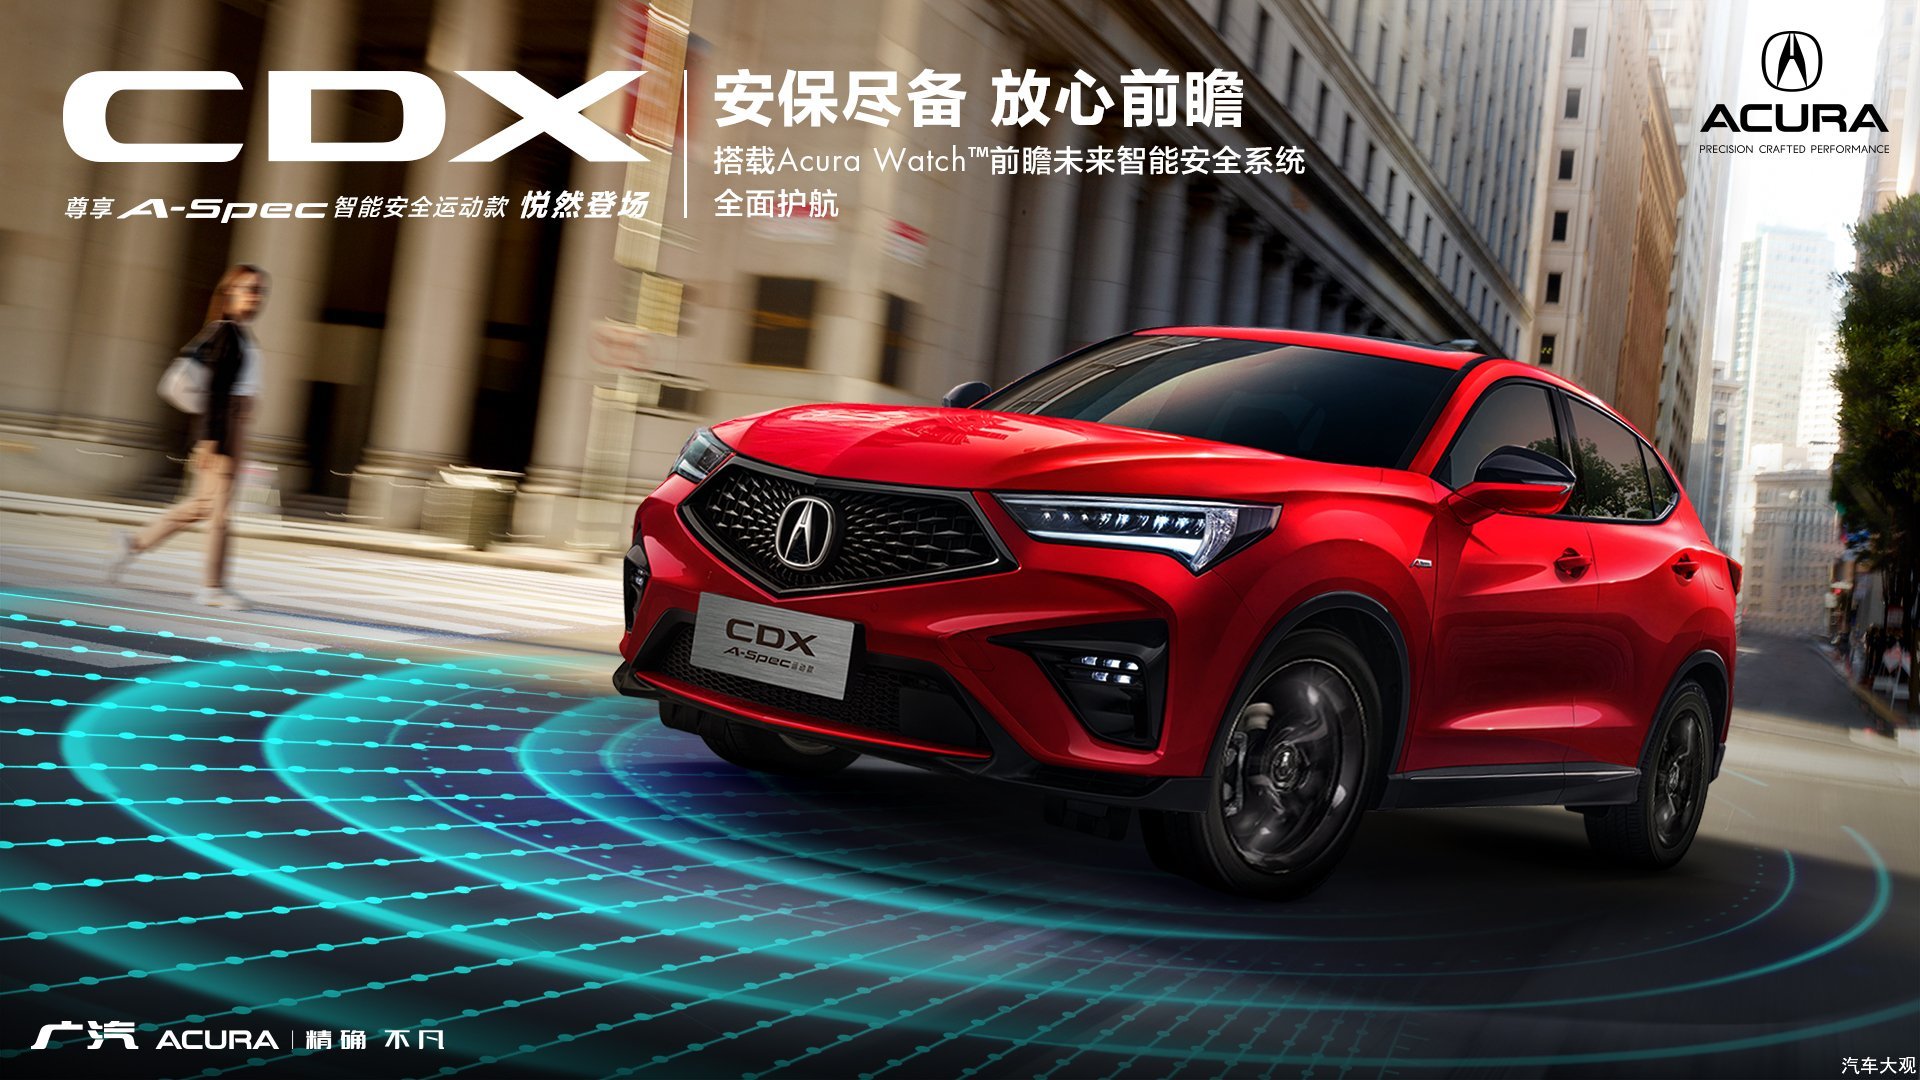 <b>前瞻未来，“智”在安全——广汽Acura NEW CDX尊享版即将全国发售</b>